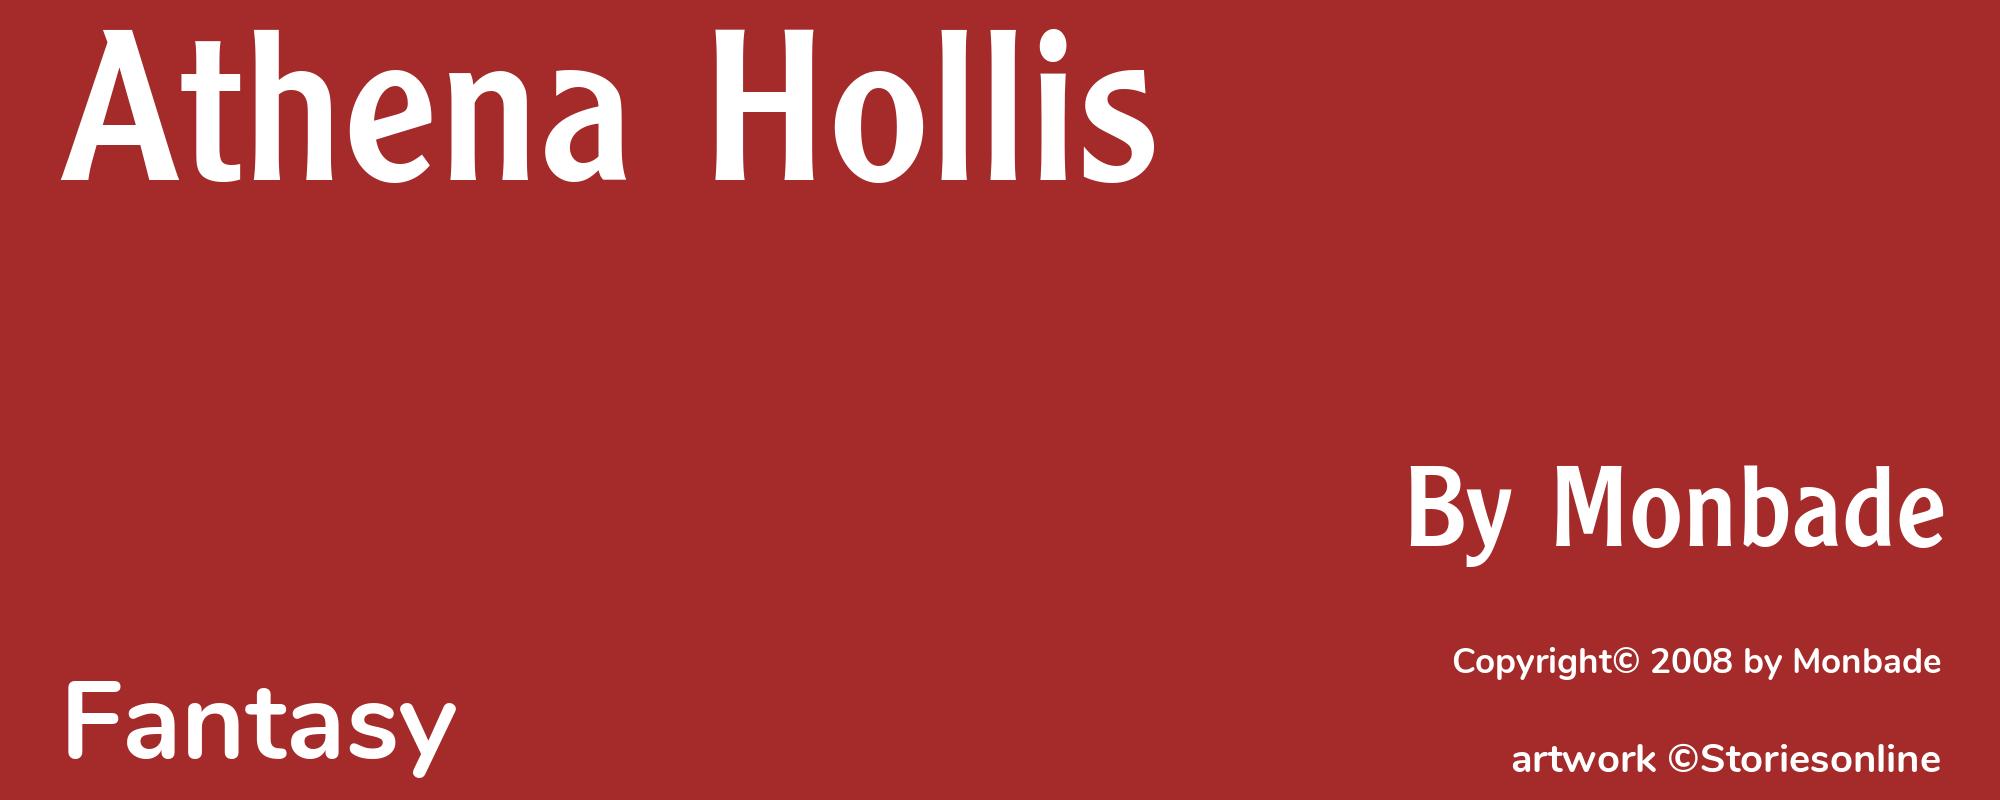 Athena Hollis - Cover